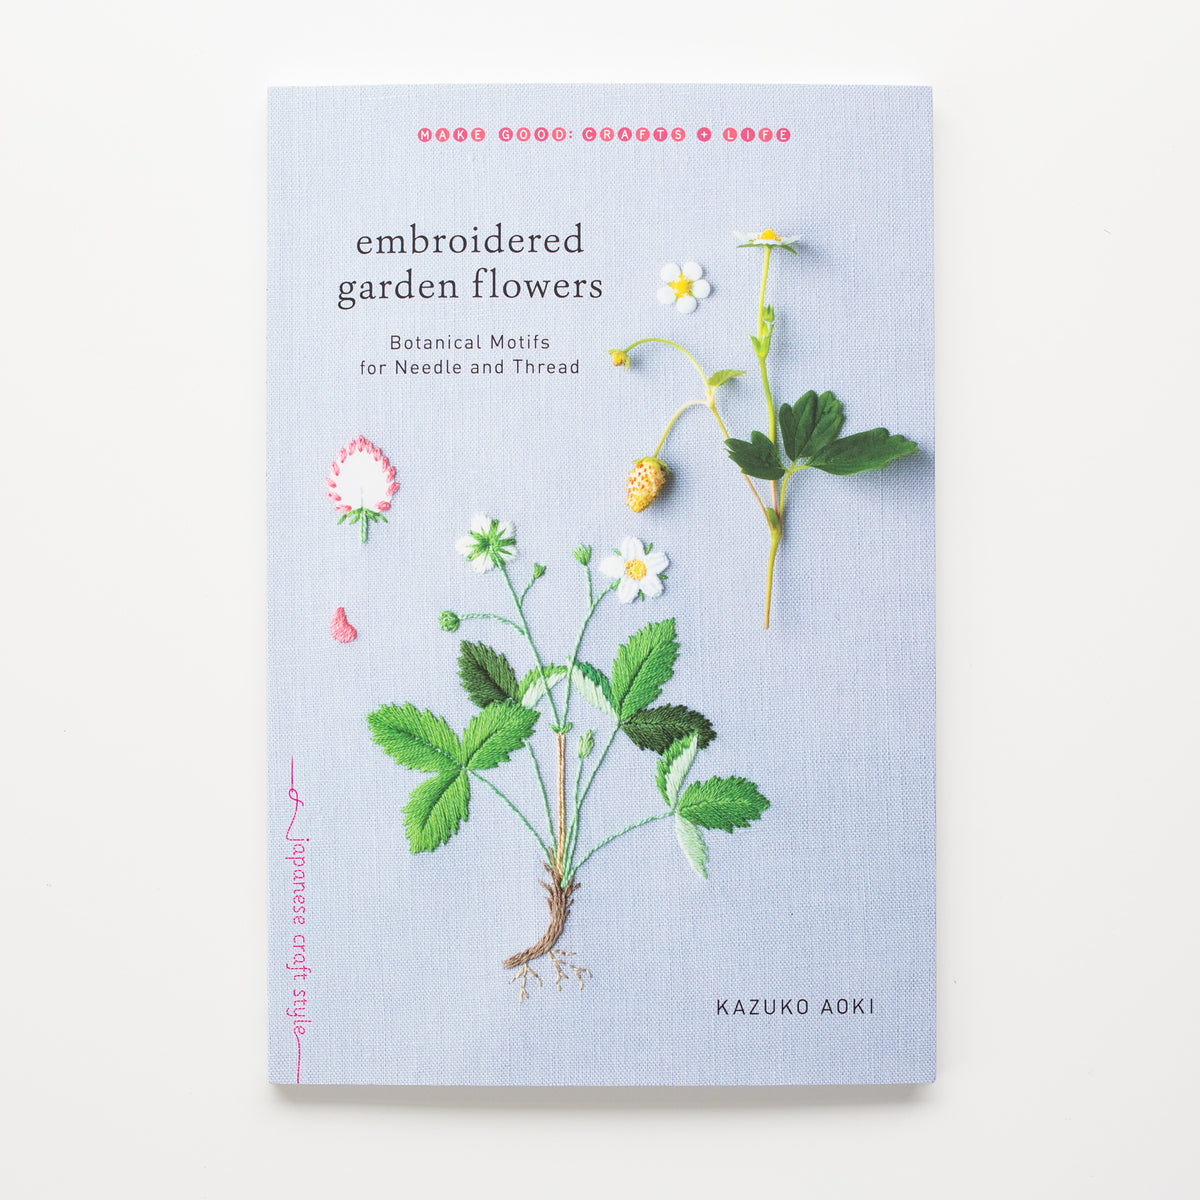 Embroidered Garden Flowers' by Kazuko Aoki